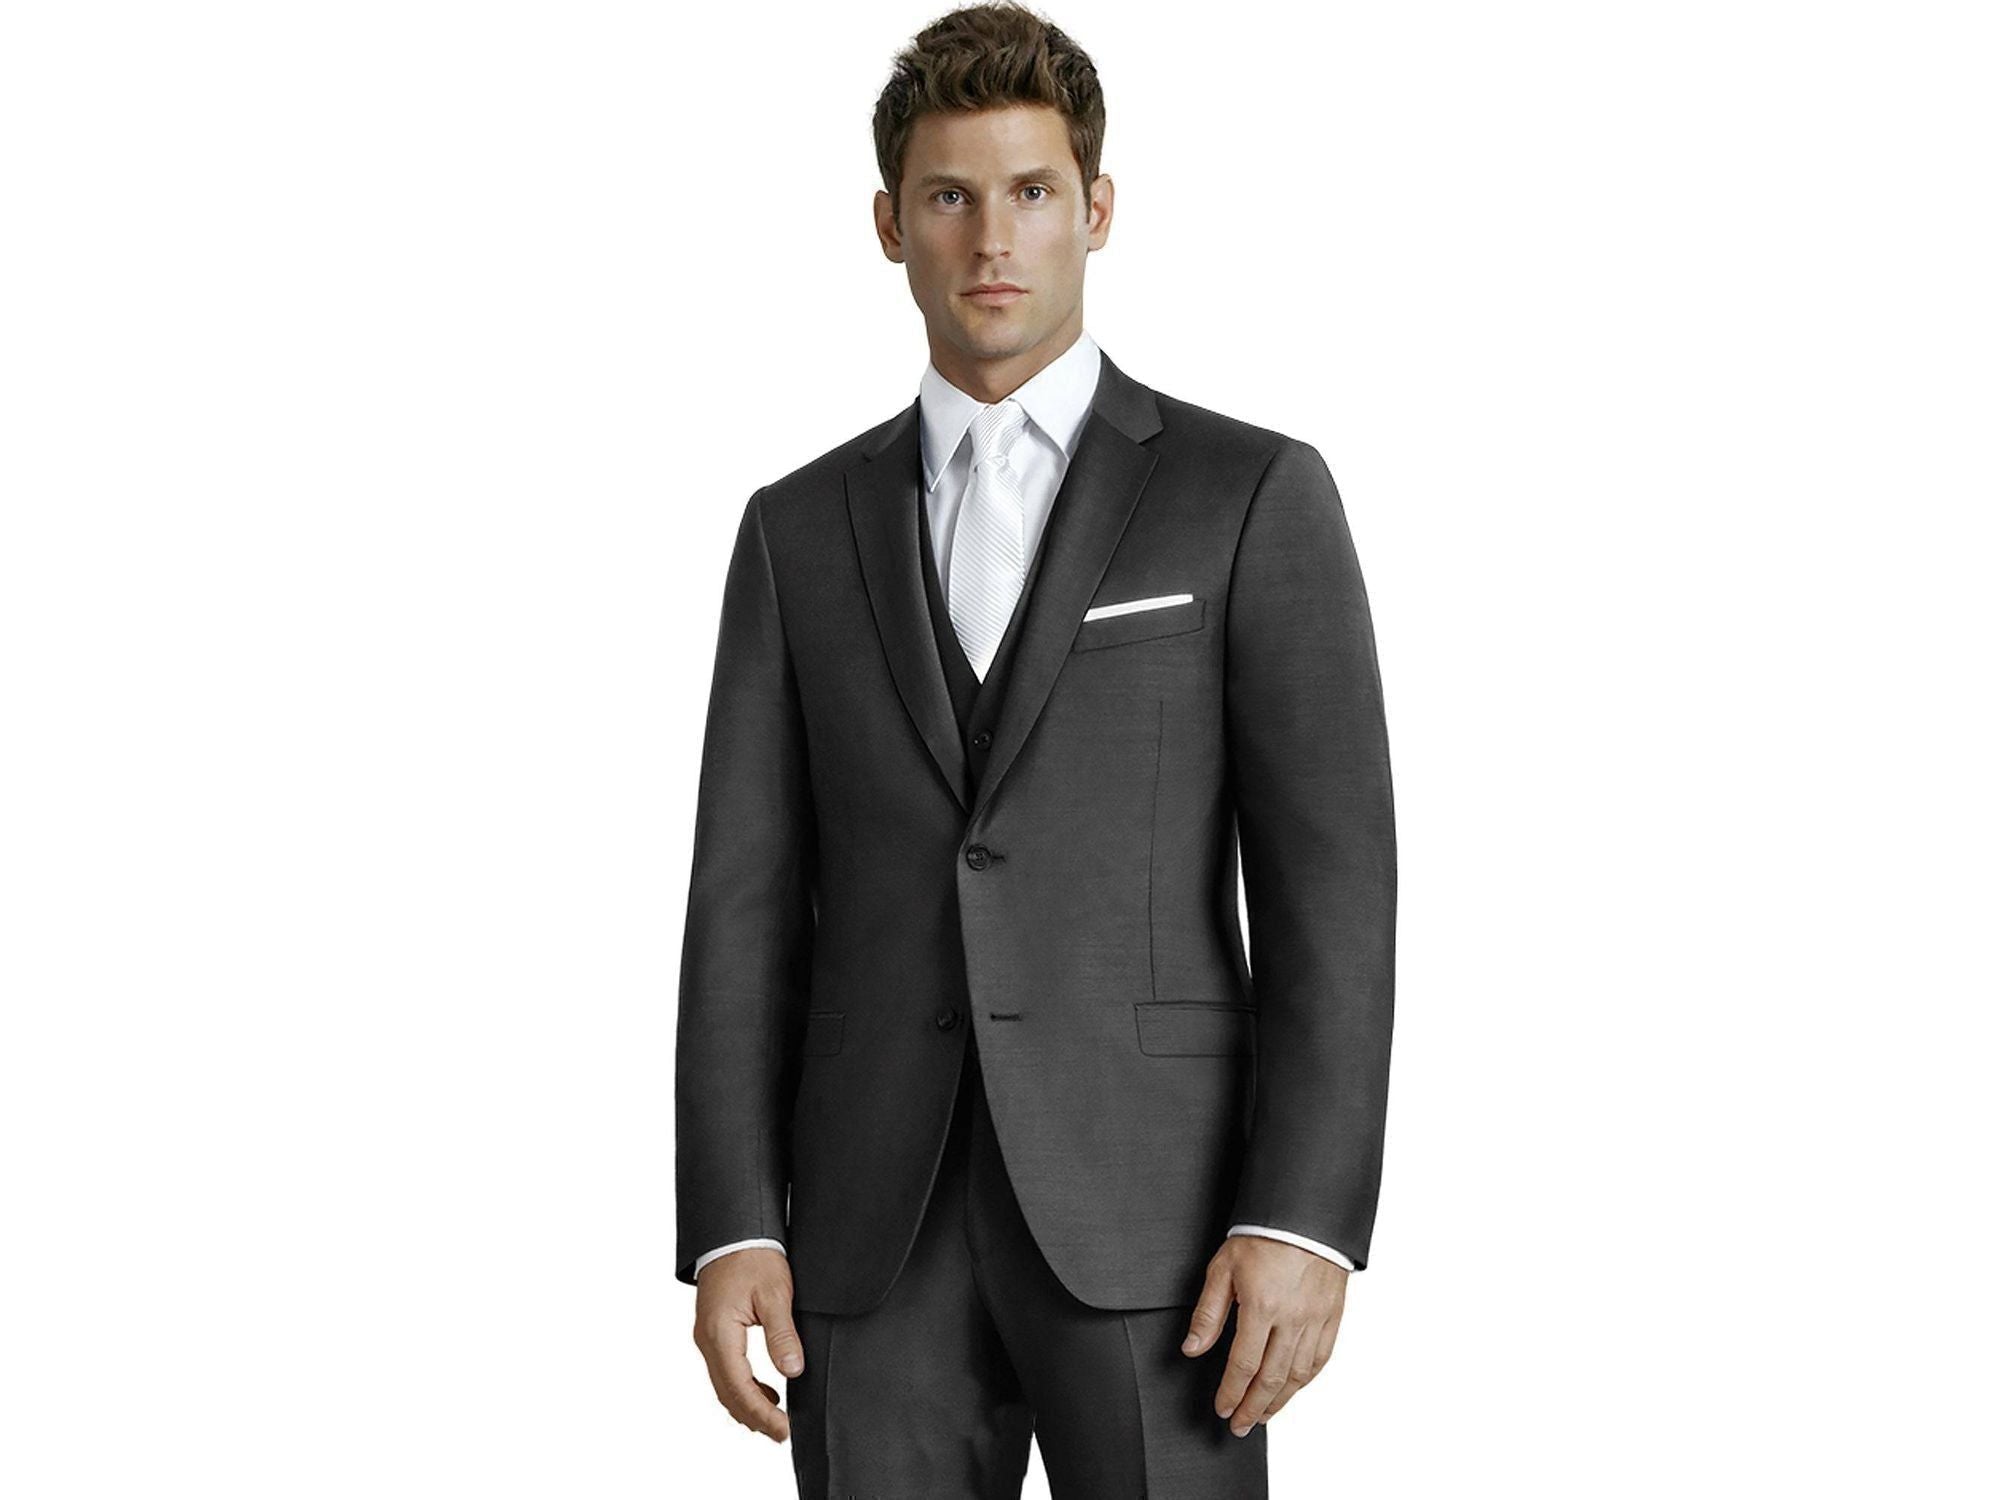 Charcoal Suit Rental - Rainwater's Men's Clothing and Tuxedo Rental